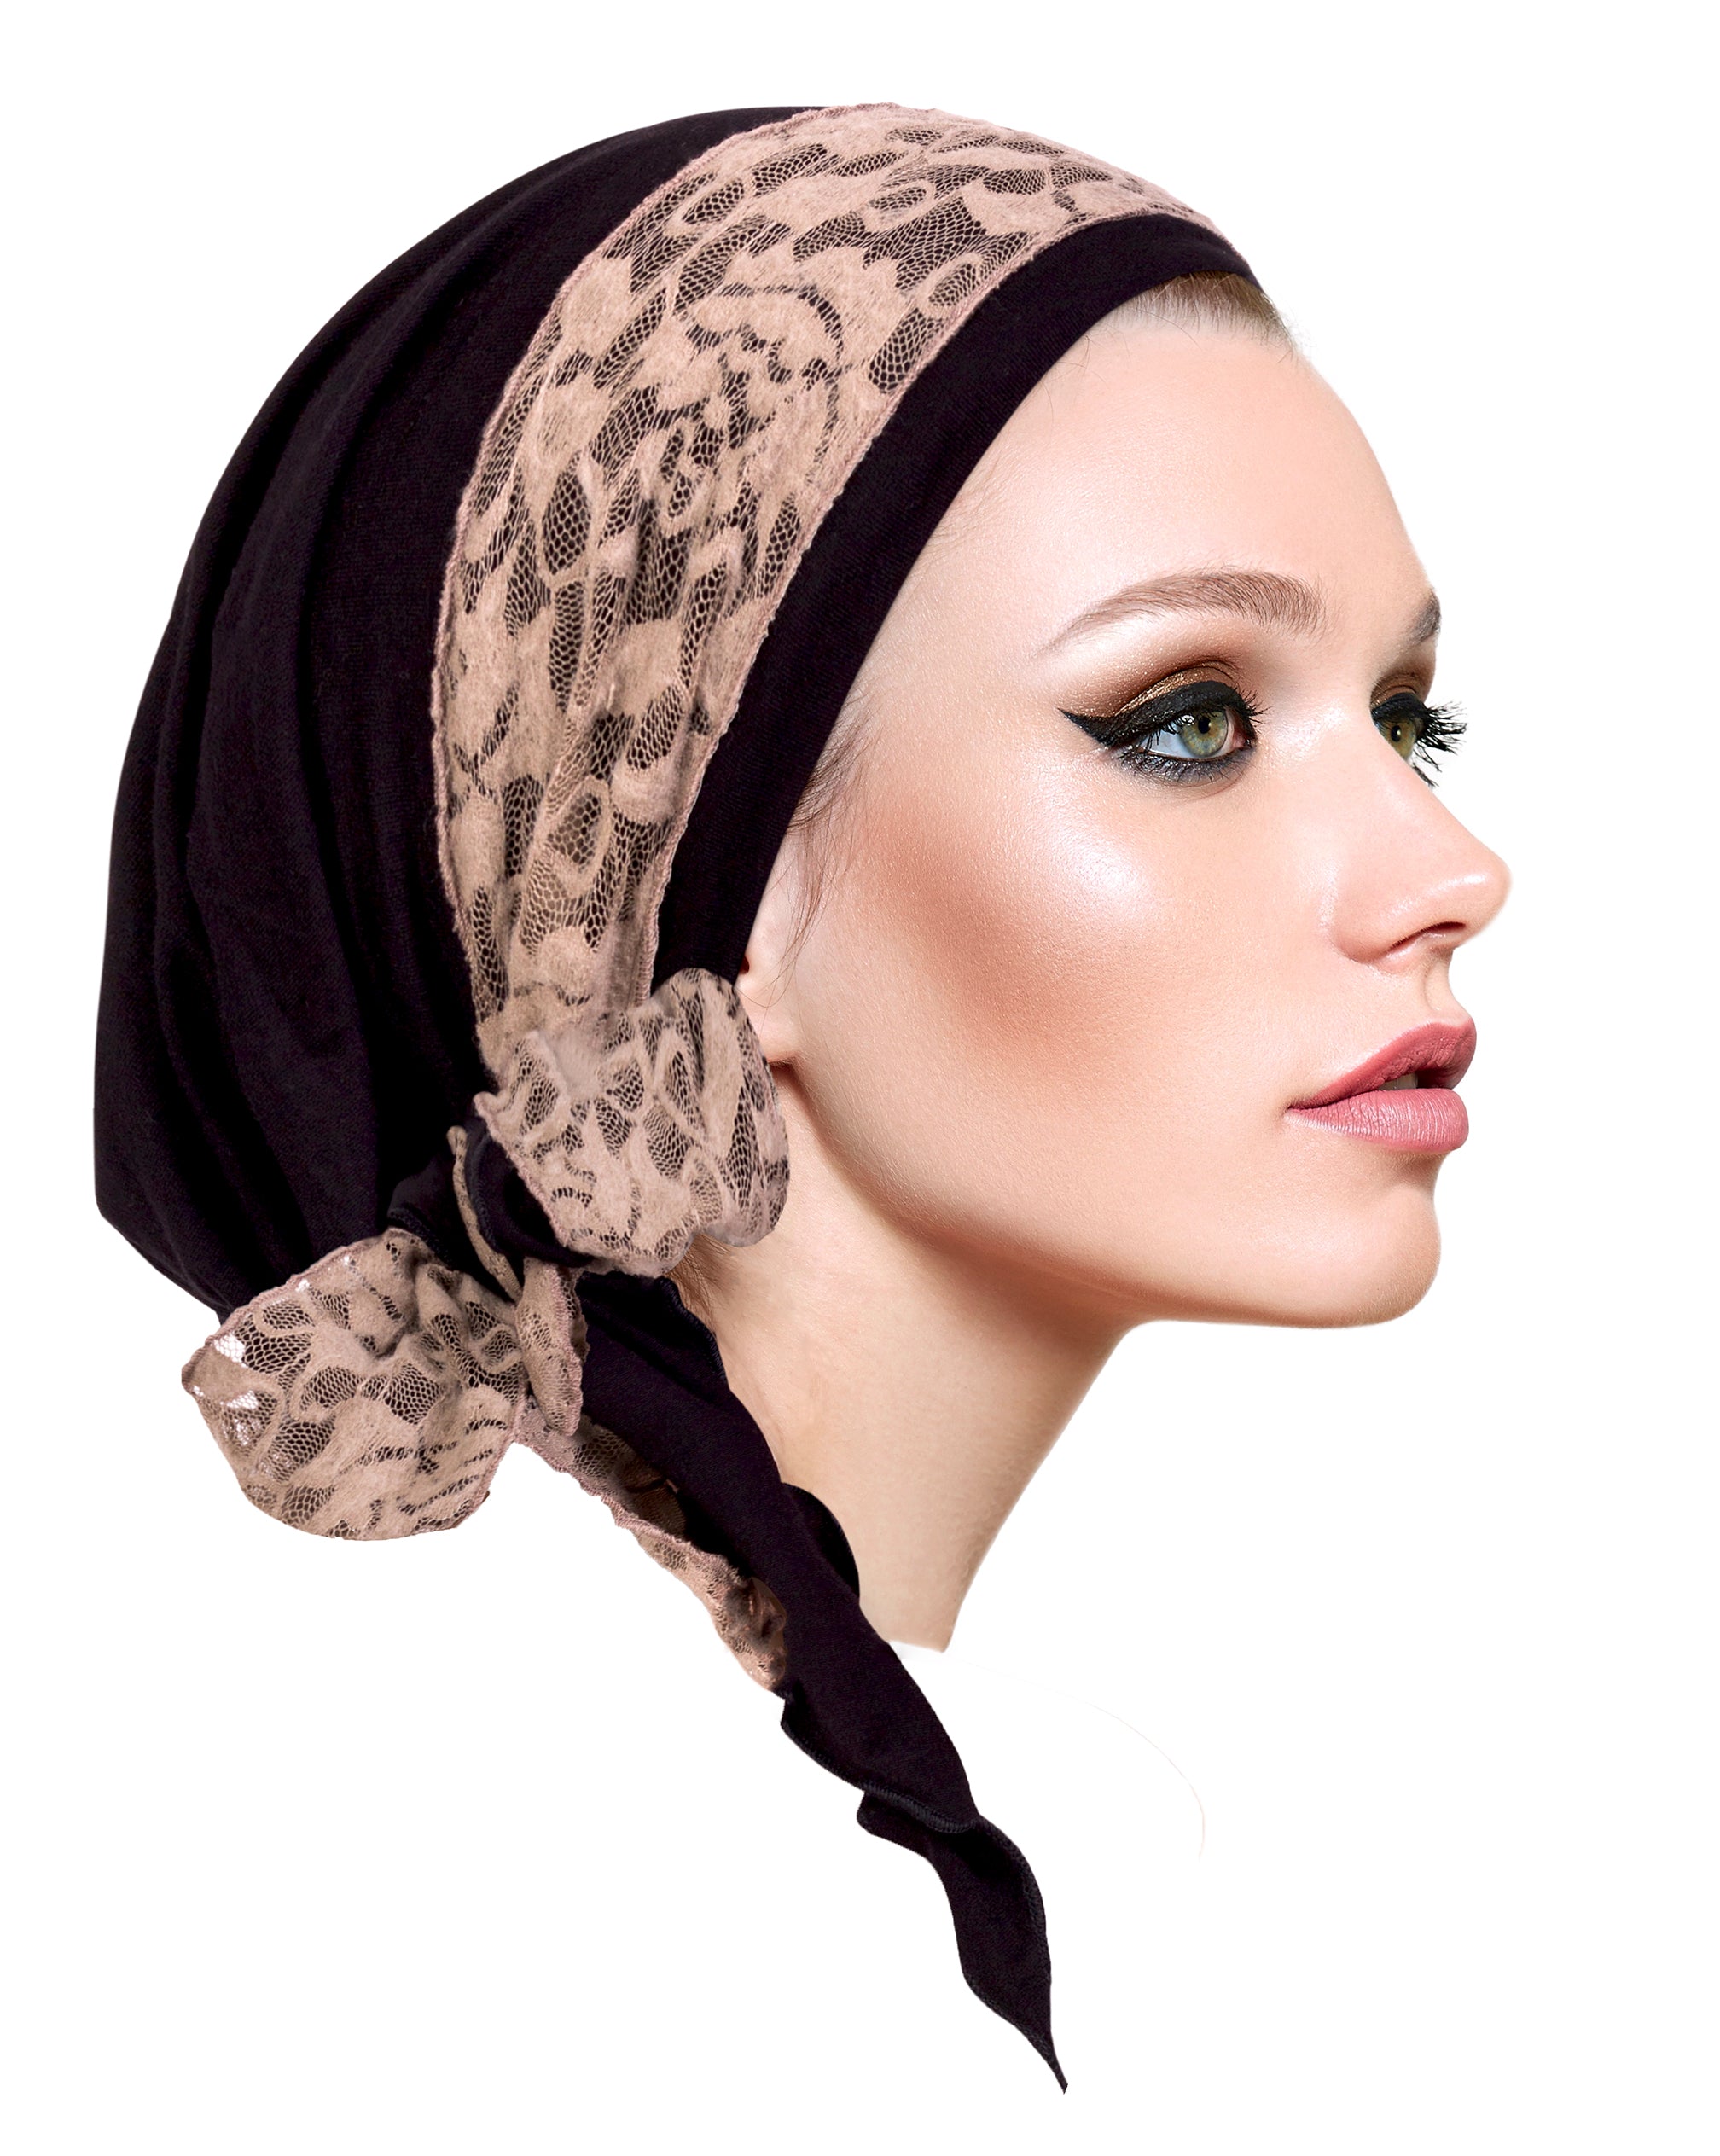 Long black headscarf vintage lace